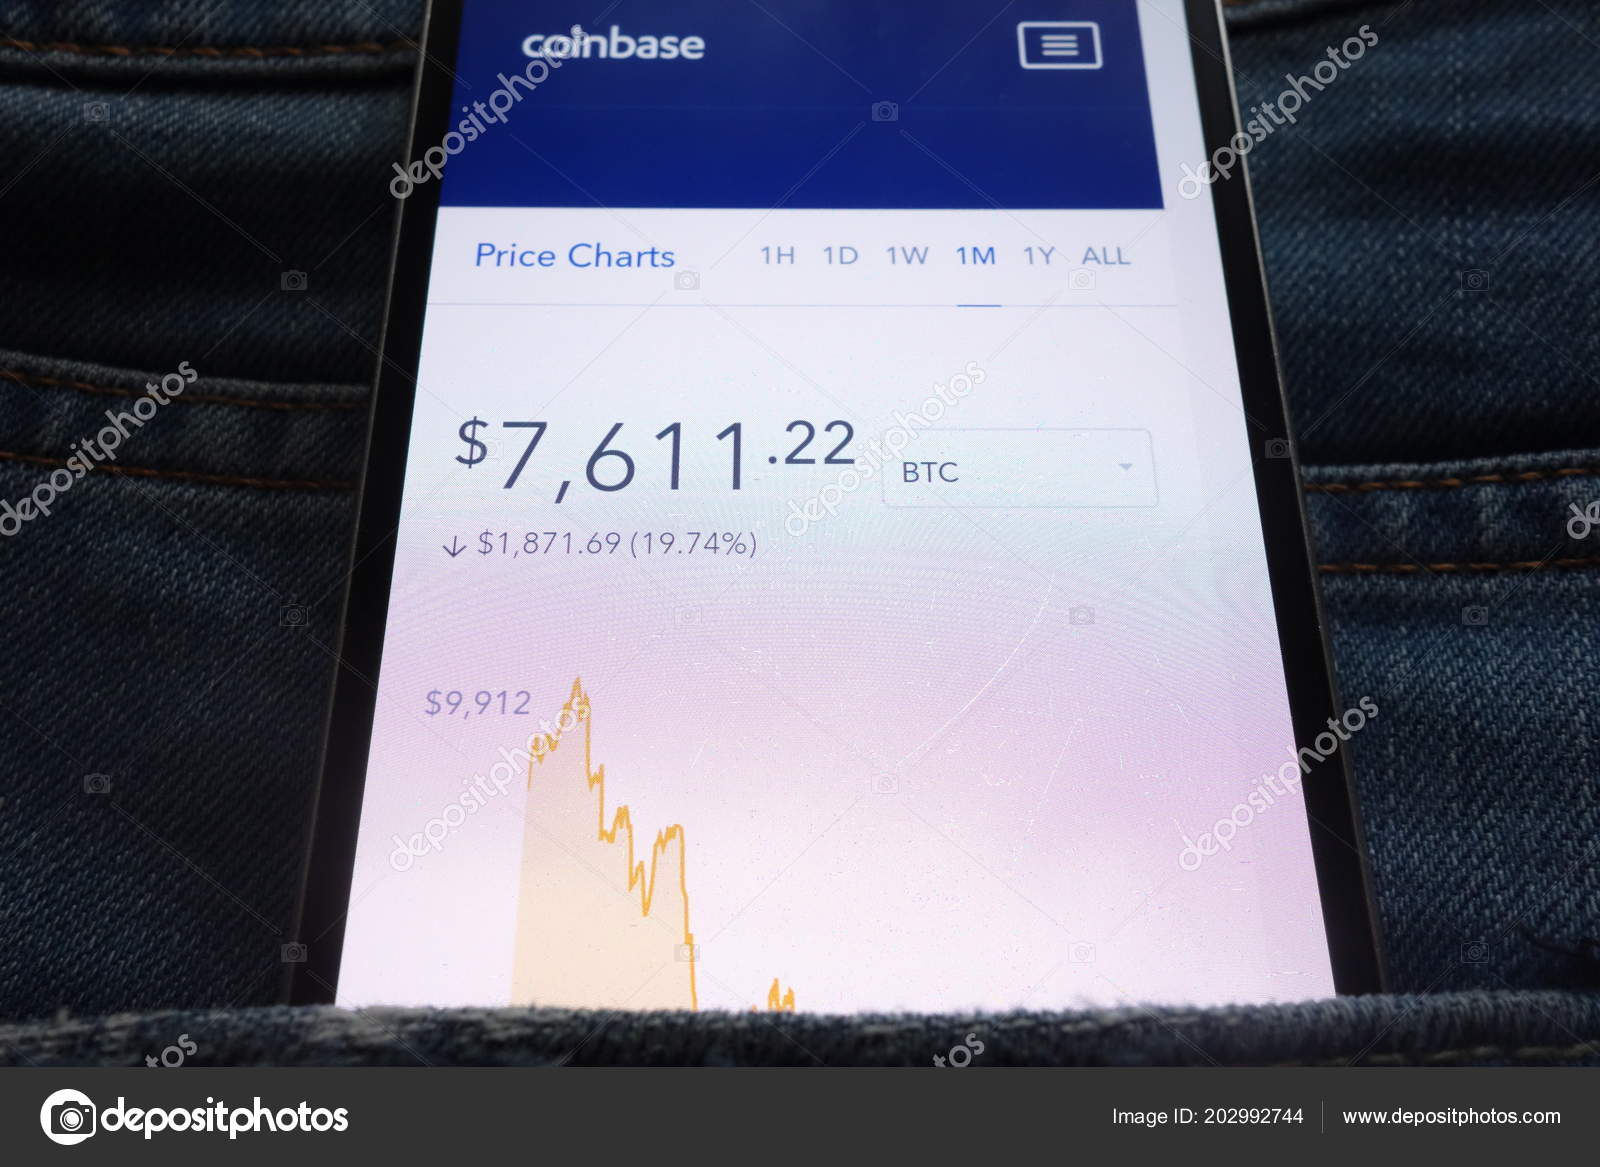 Coinbase Price Chart